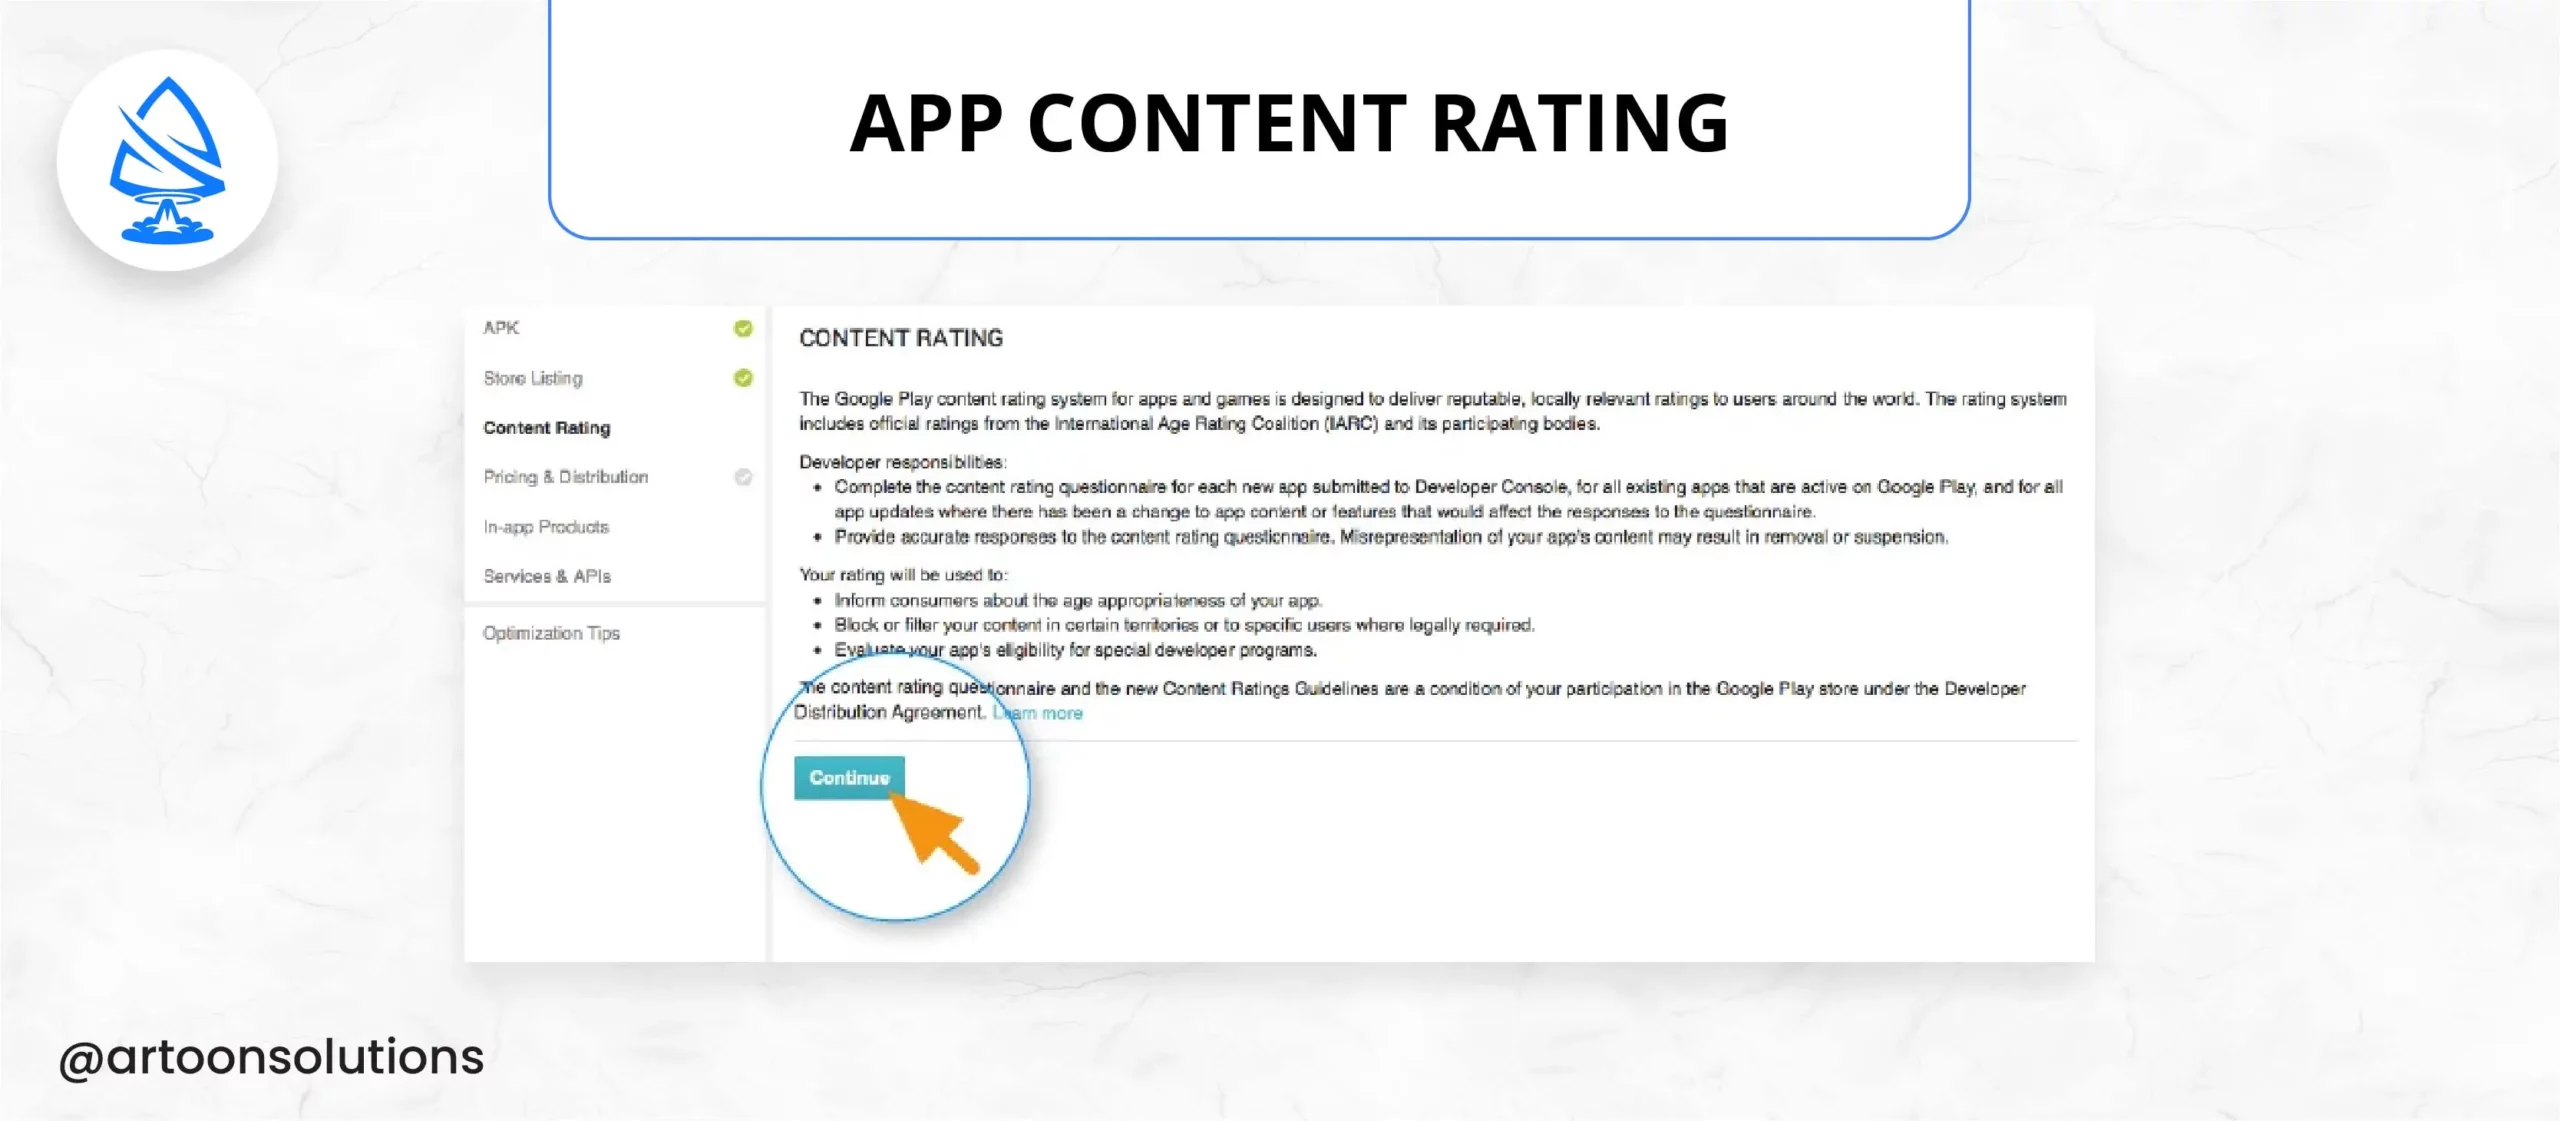 App Content Rating